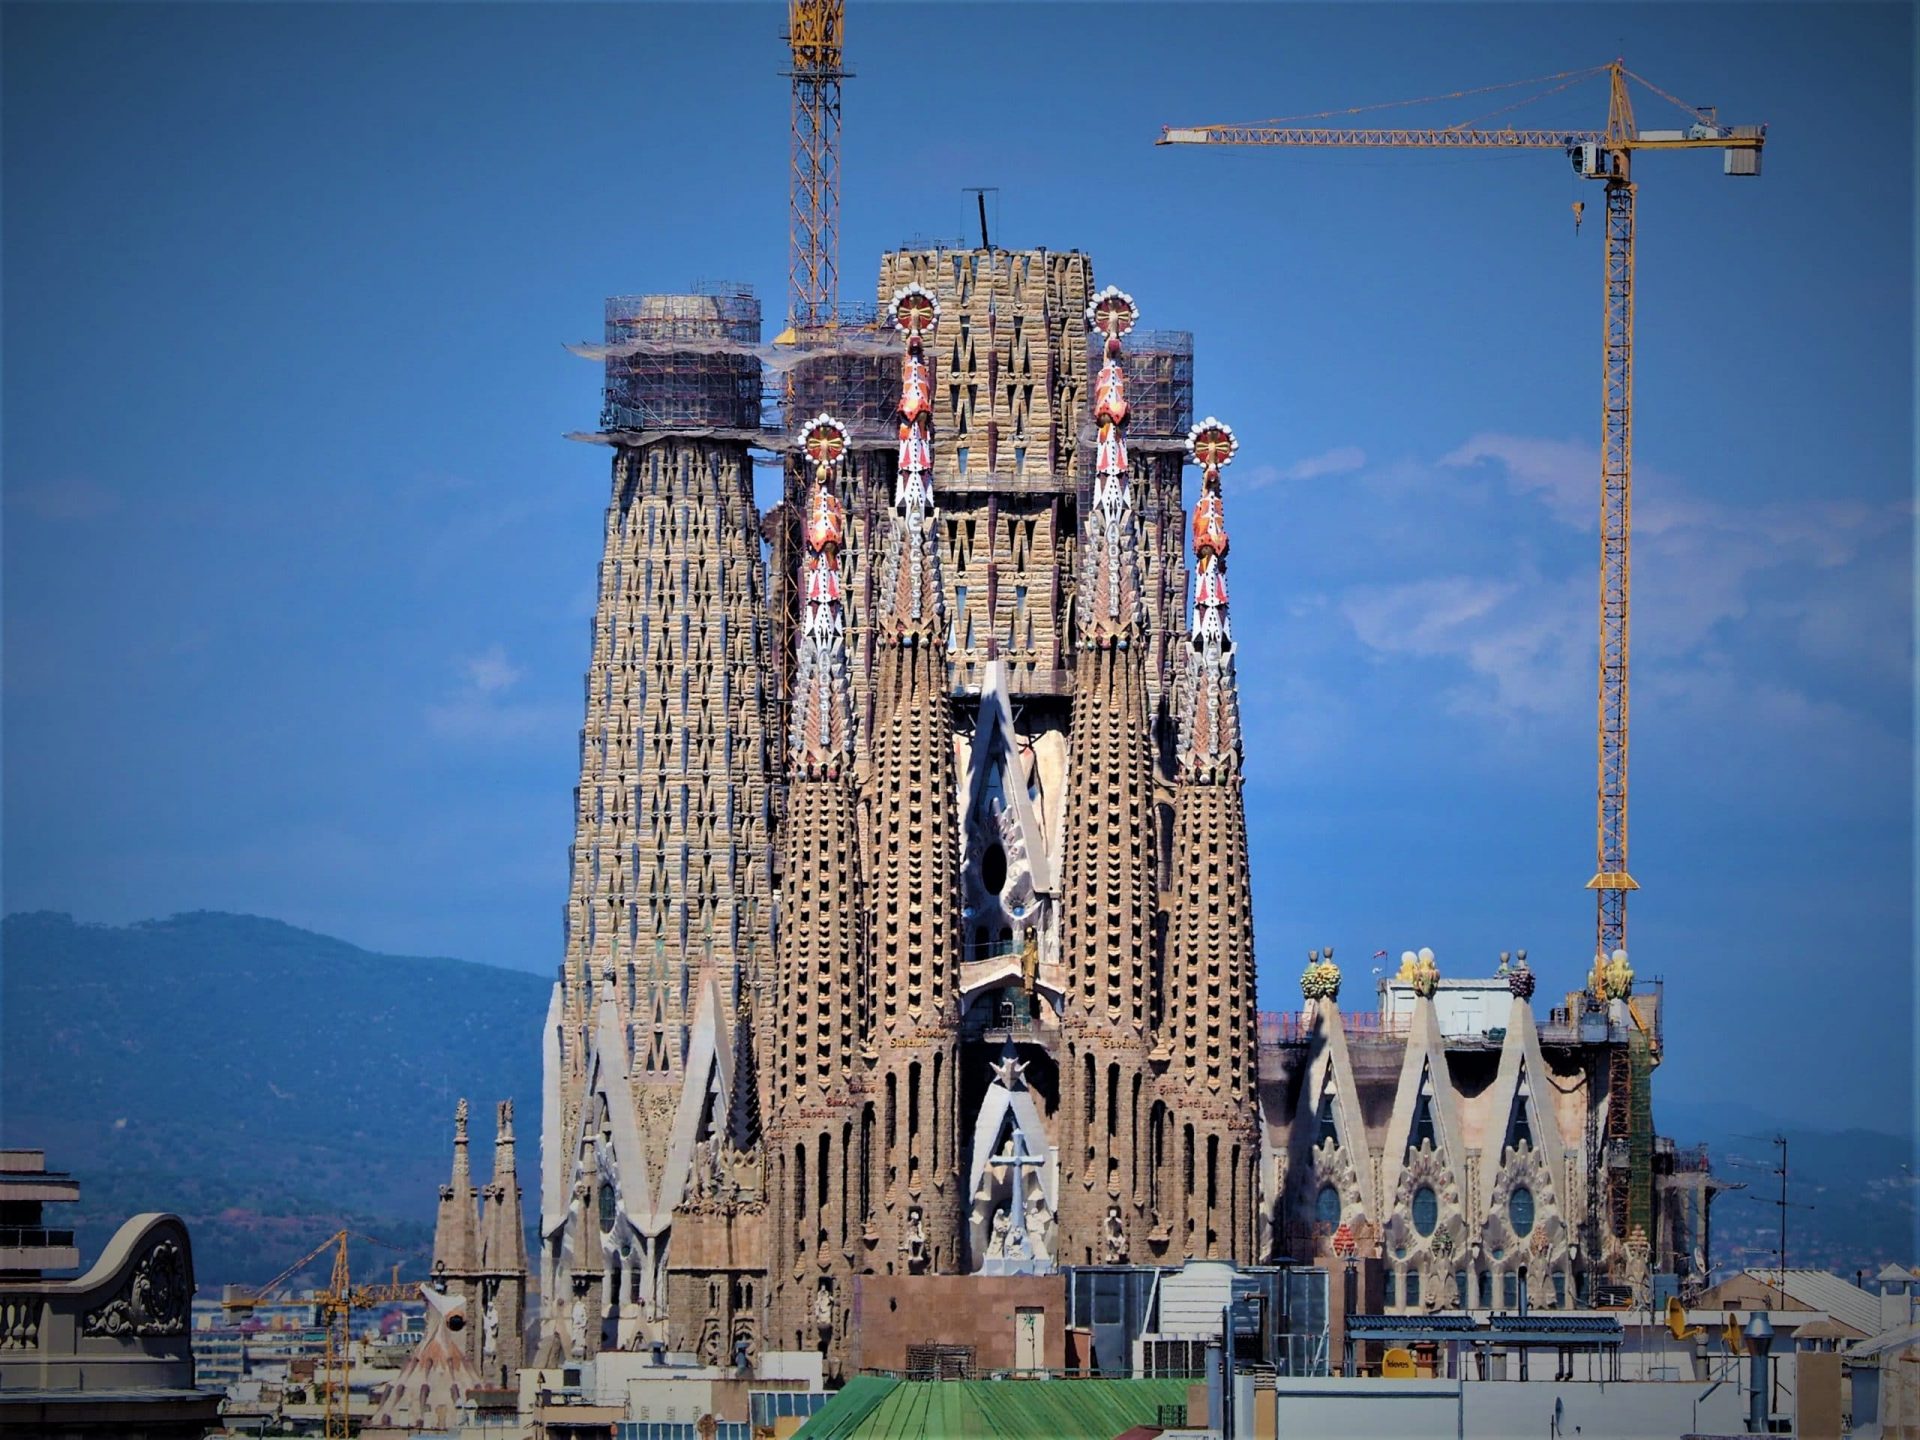 la sagrada família 2021 on construction, towers and cranes. Antoni Gaudí, Barcelona.